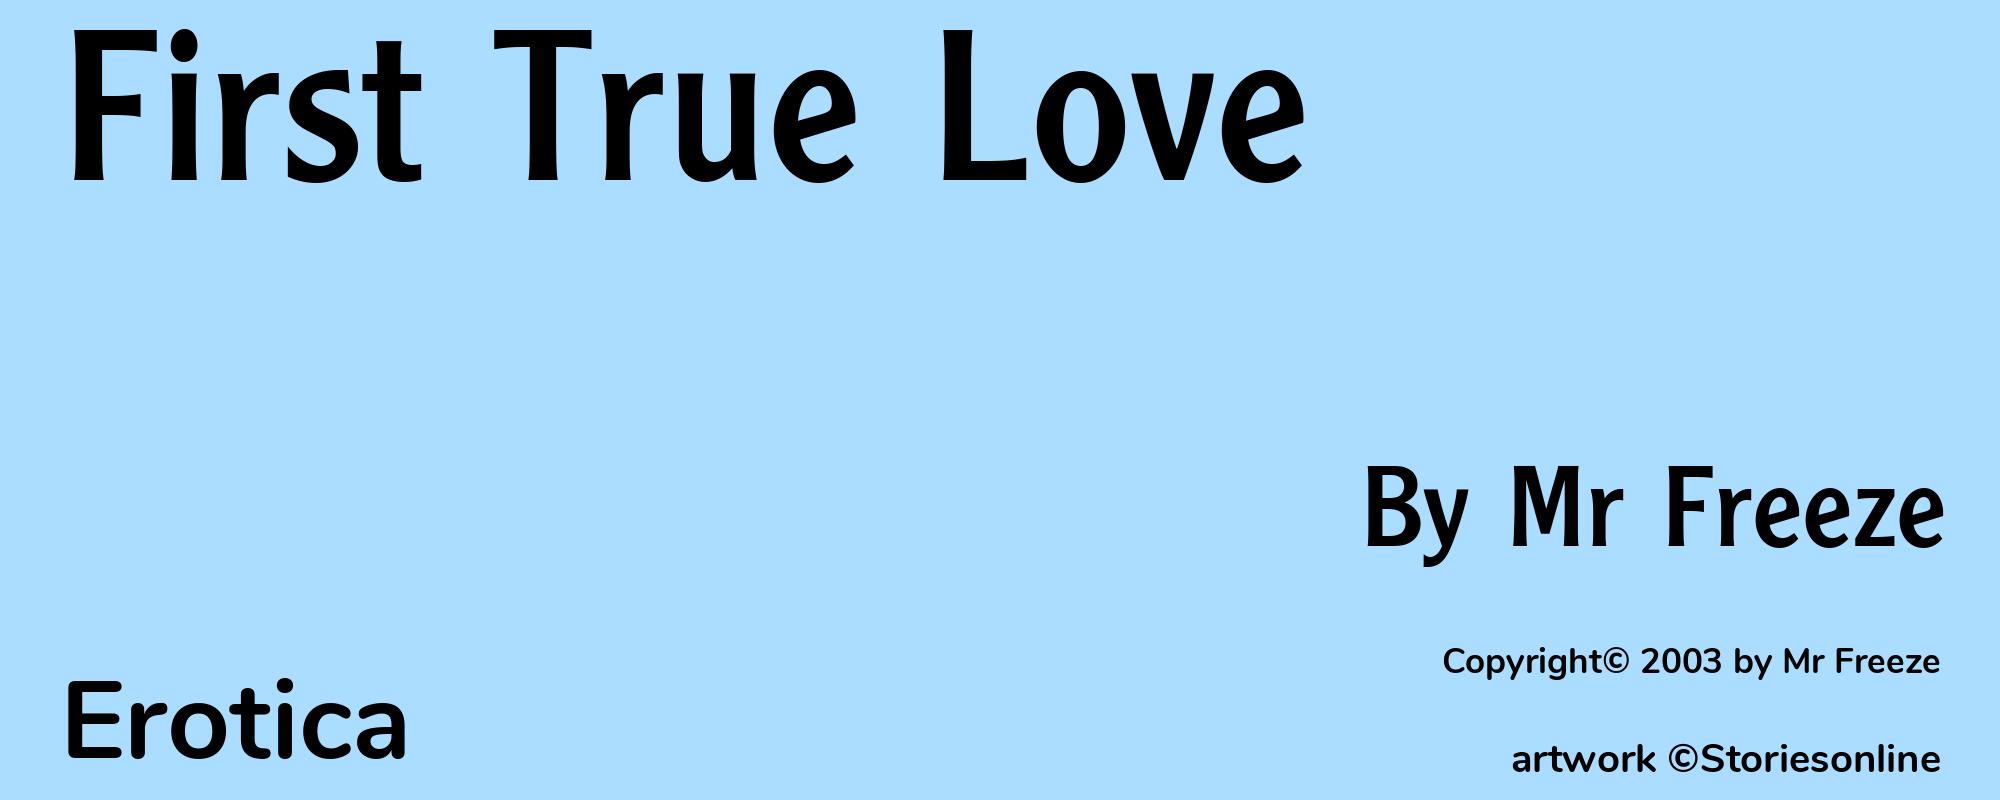 First True Love - Cover